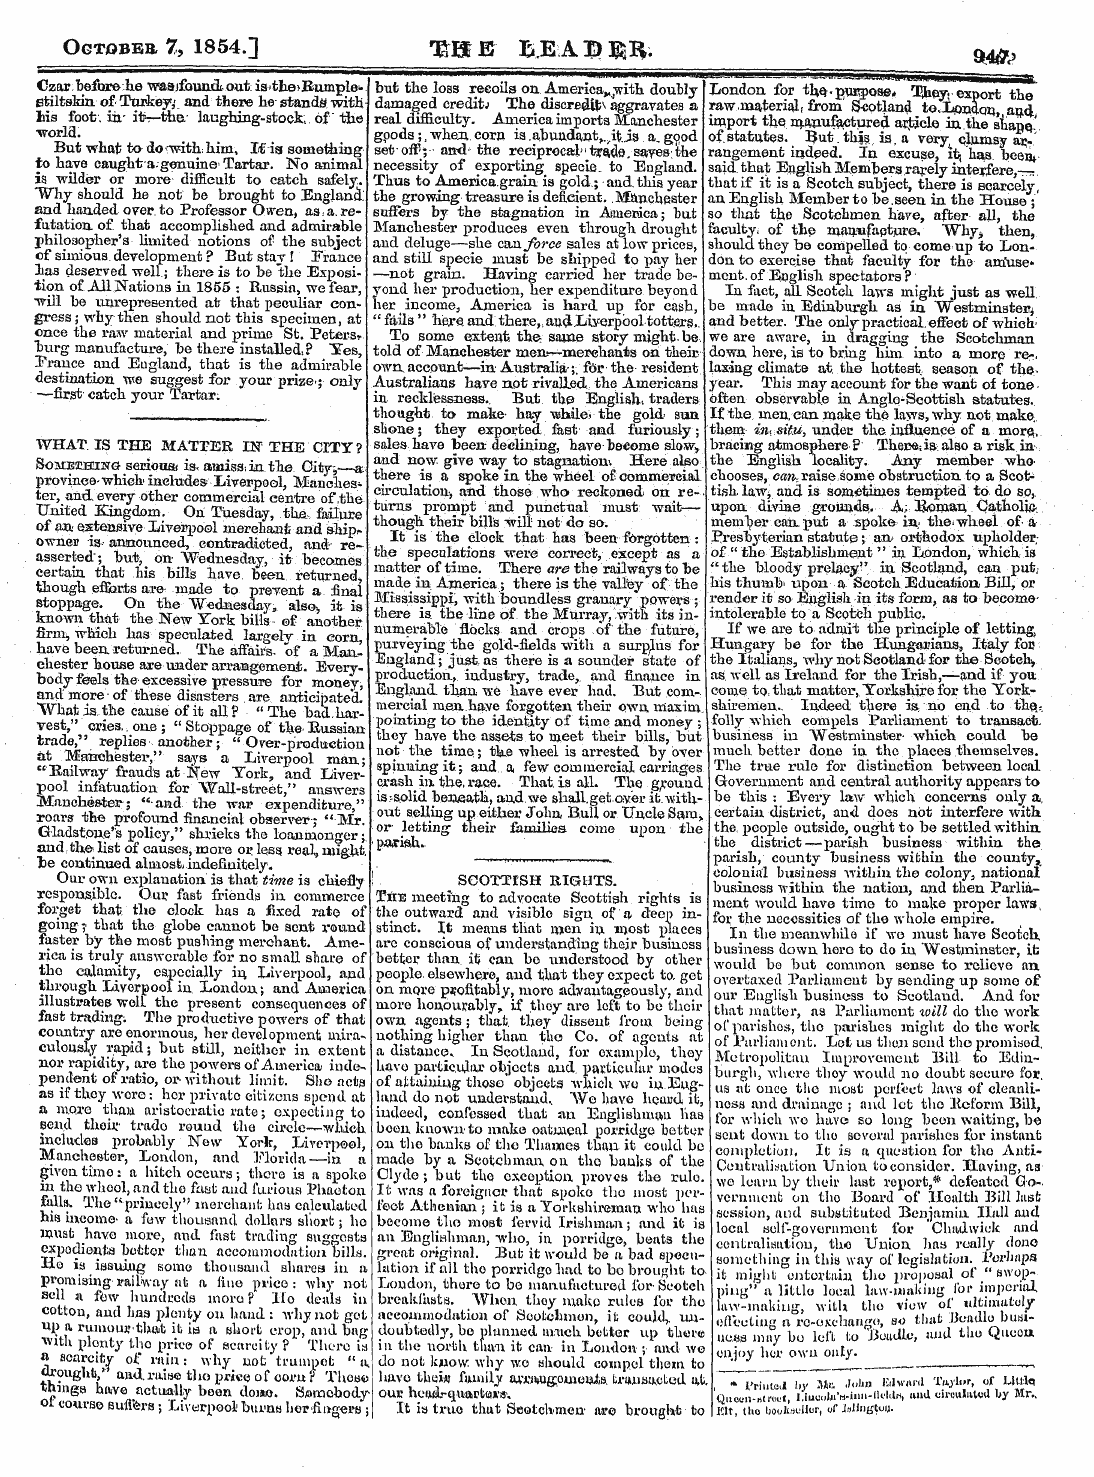 Leader (1850-1860): jS F Y, Country edition - Octobea 7, 1854.] Ik B Bjs'a I) ©B. G^R ...